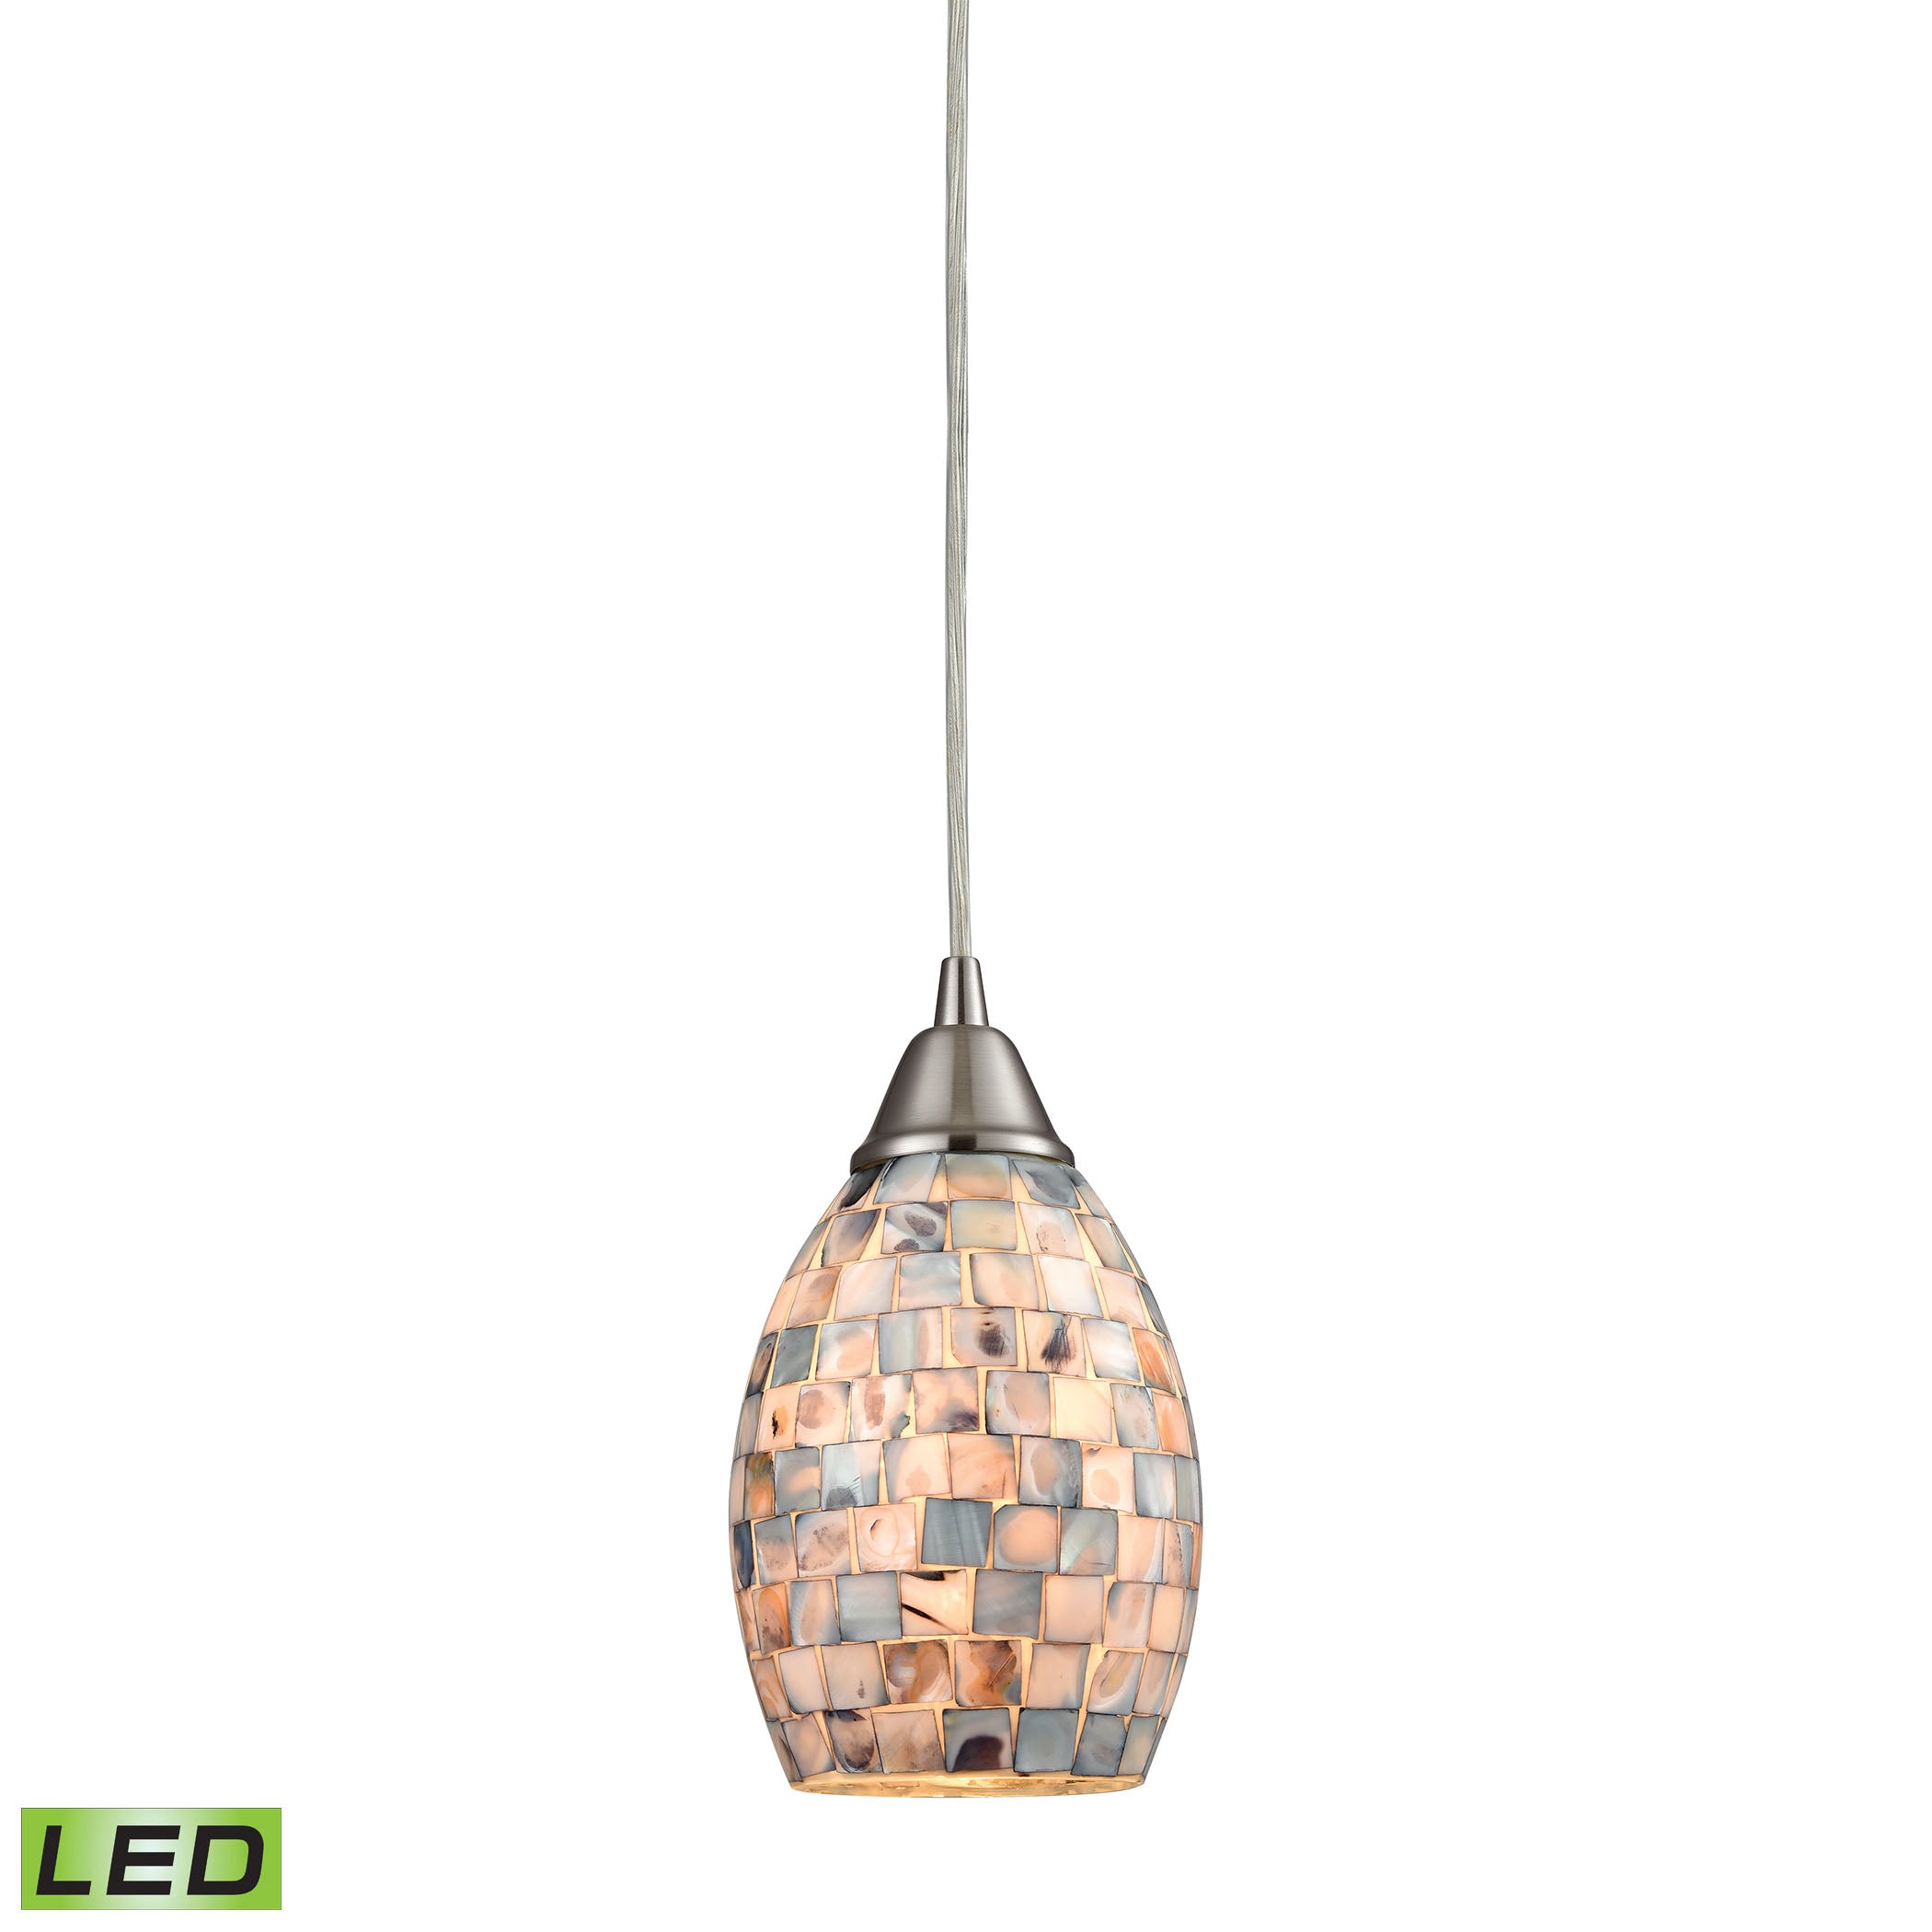 ELK Lighting 10444/1-LED Capri 1-Light Mini Pendant in Satin Nickel with Gray Capiz Shells on Glass - Includes LED Bulb